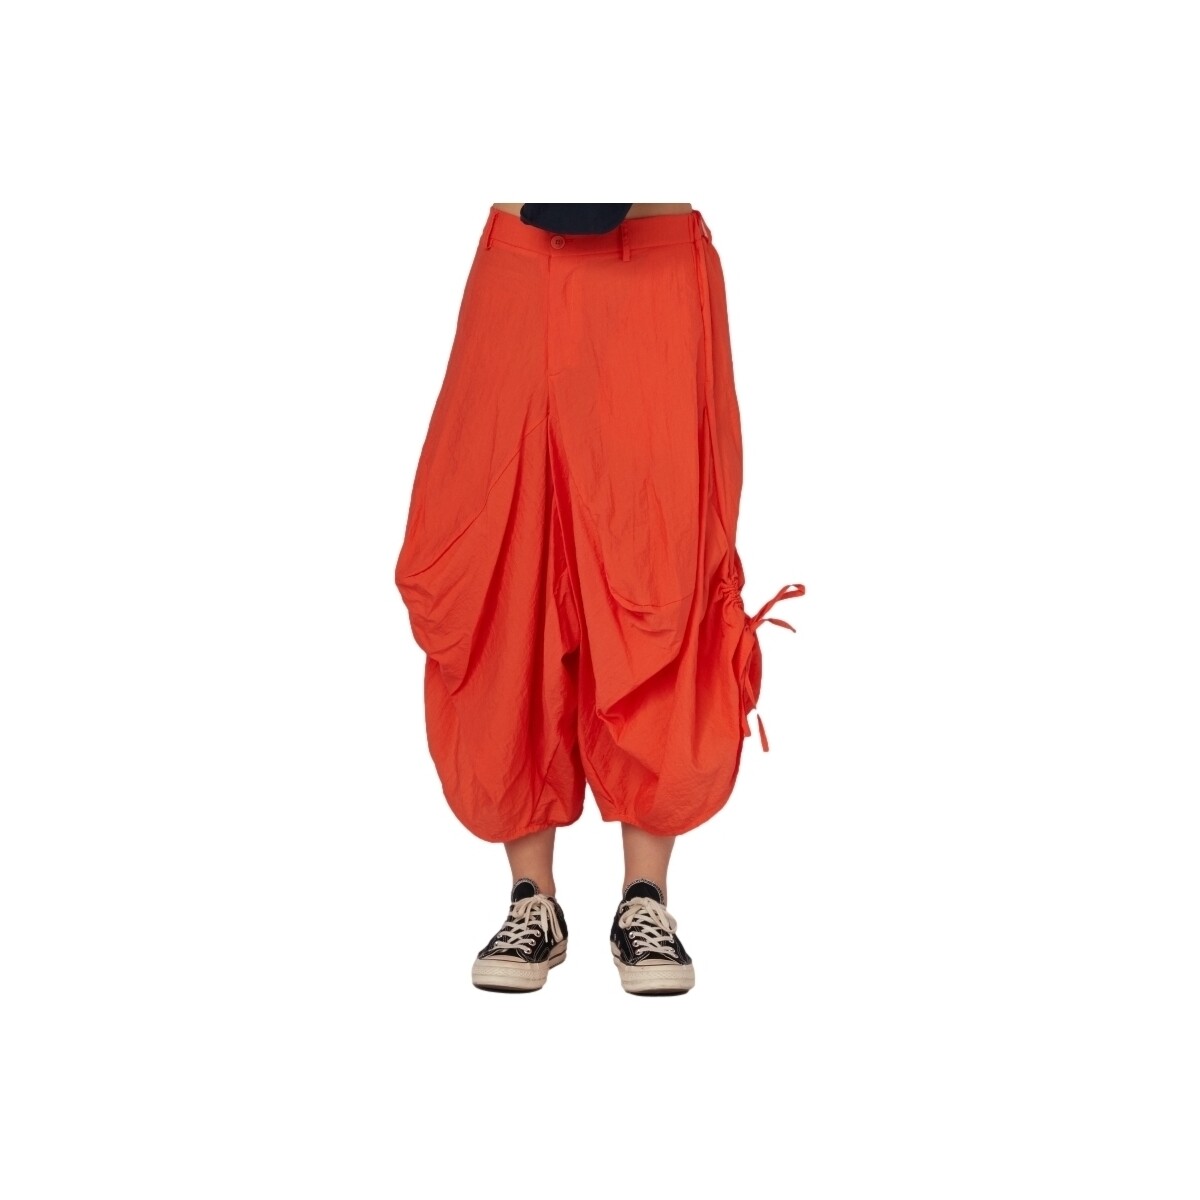 Kleidung Damen Hosen Wendy Trendy Pants 800075 - Orange Orange